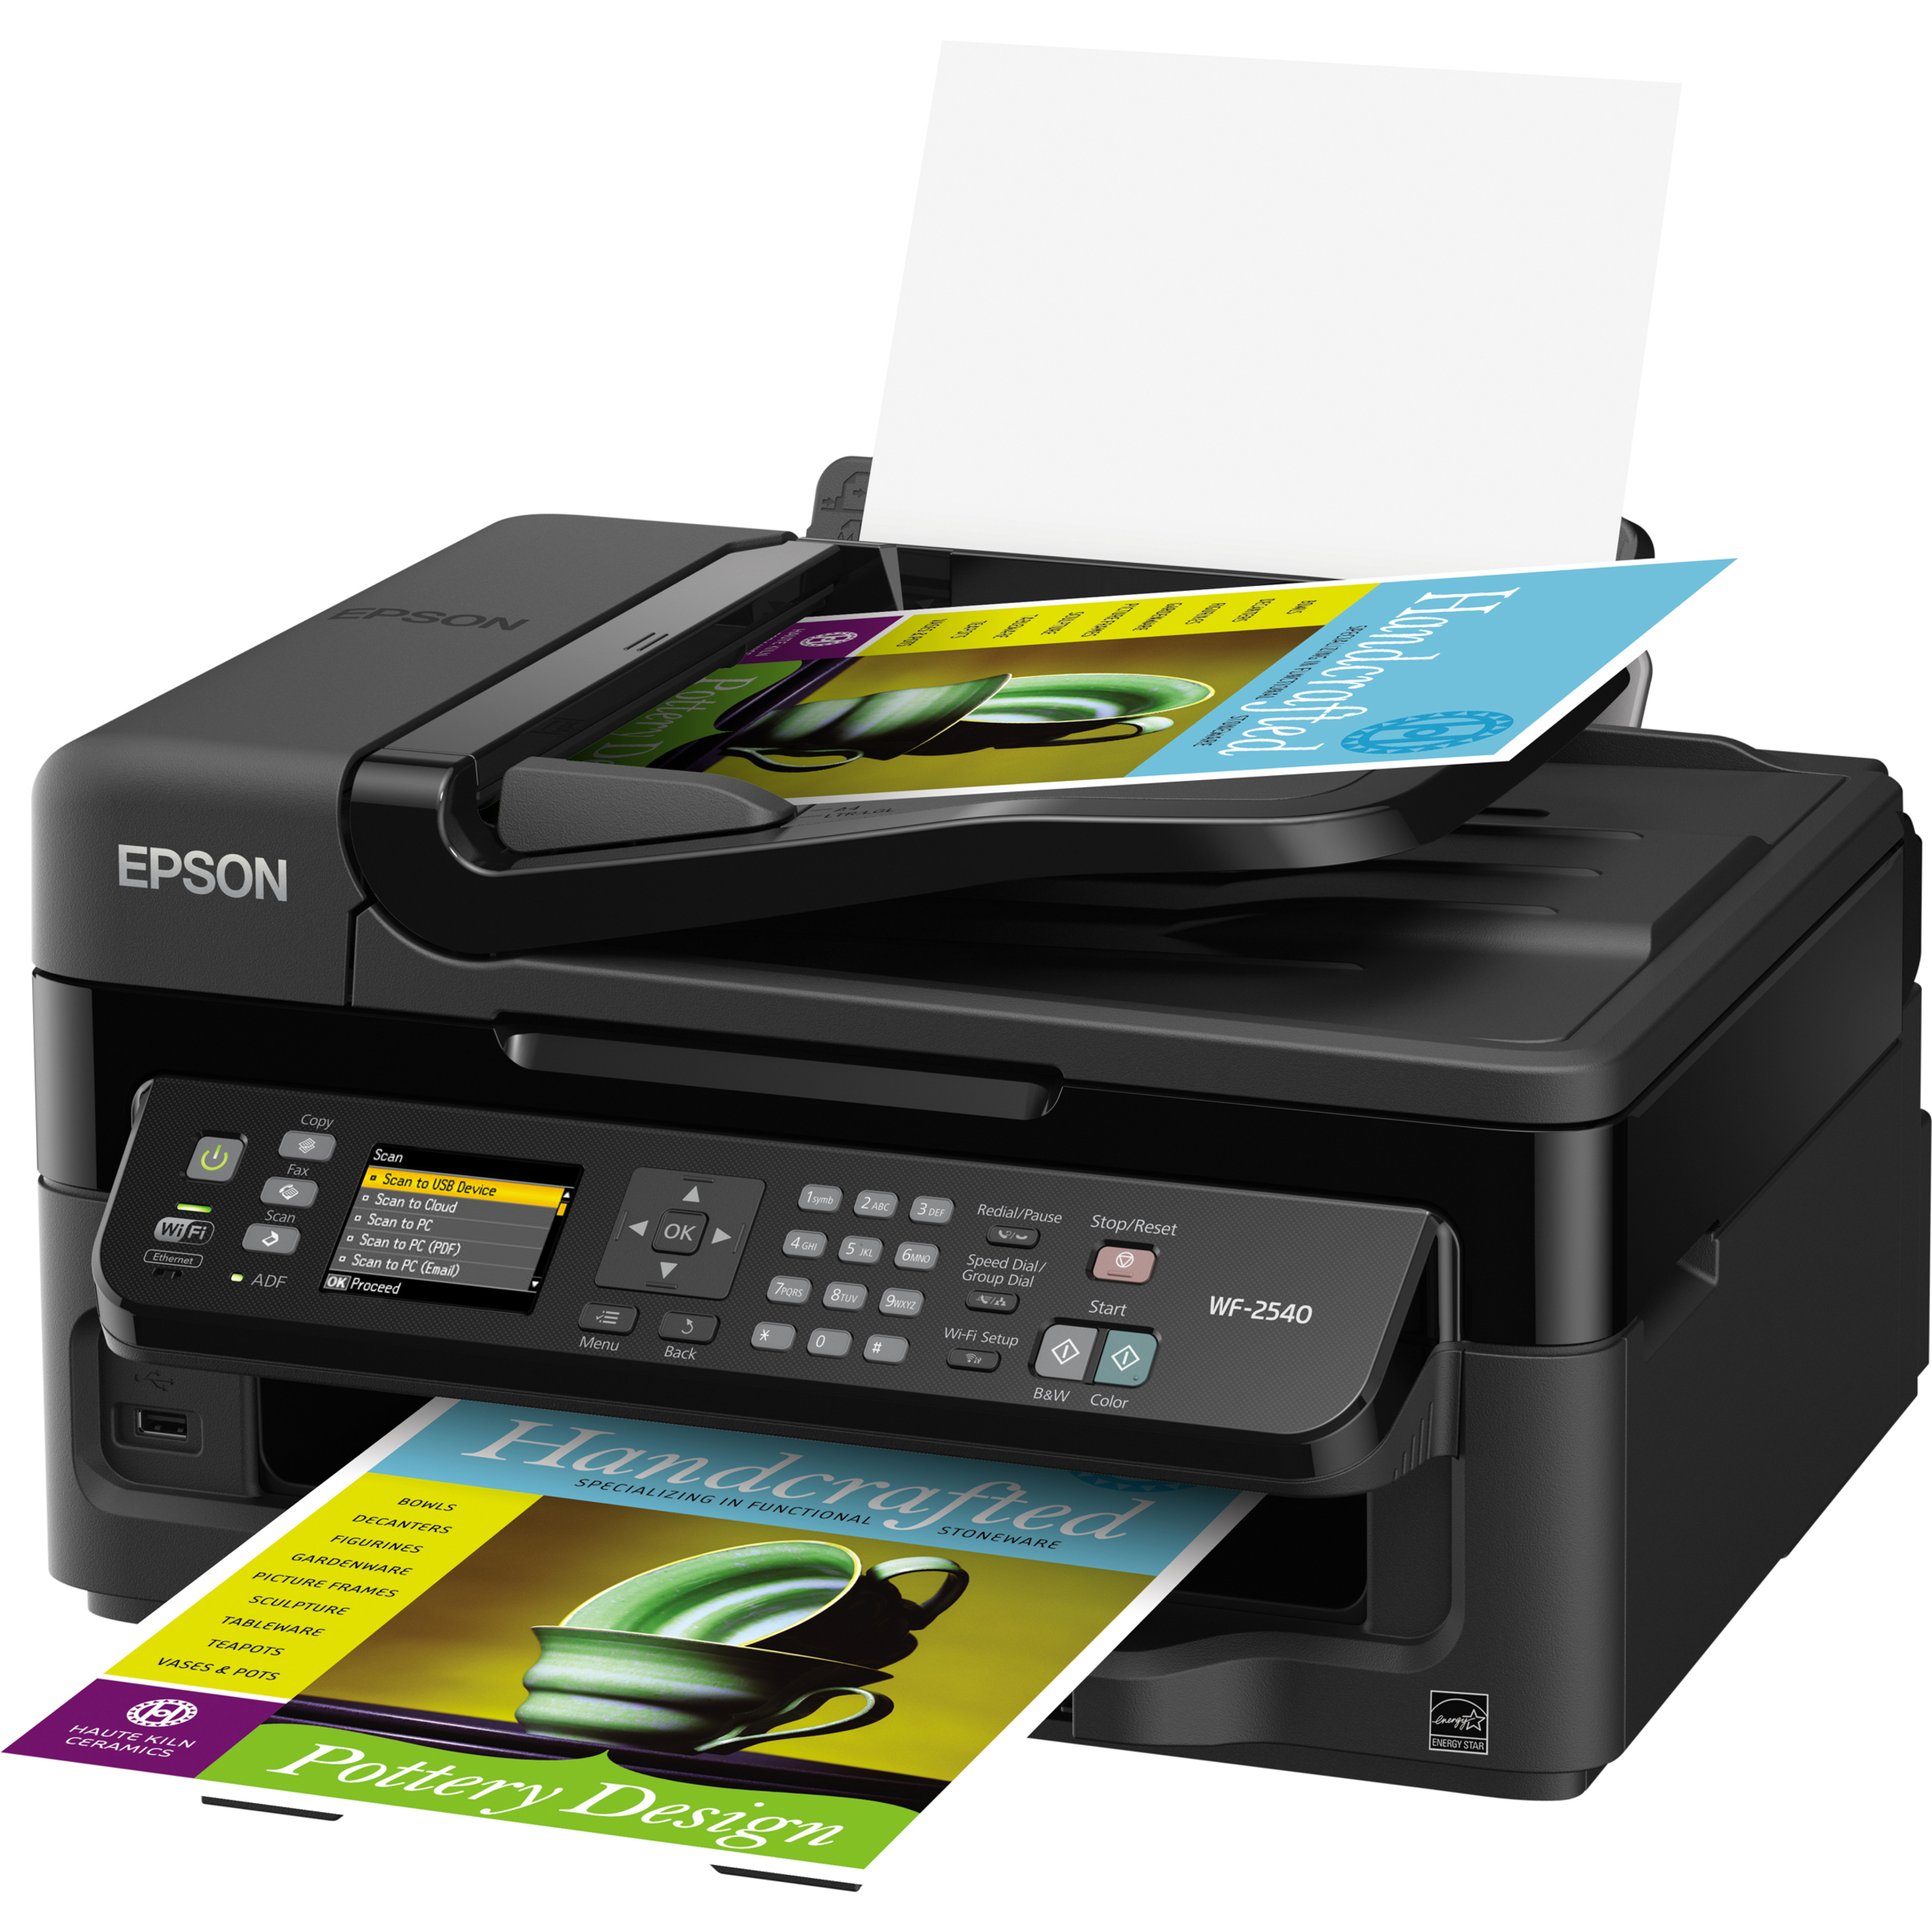 Epson WorkForce WF-2540 Wireless Inkjet Multifunction Printer, Color - image 2 of 4